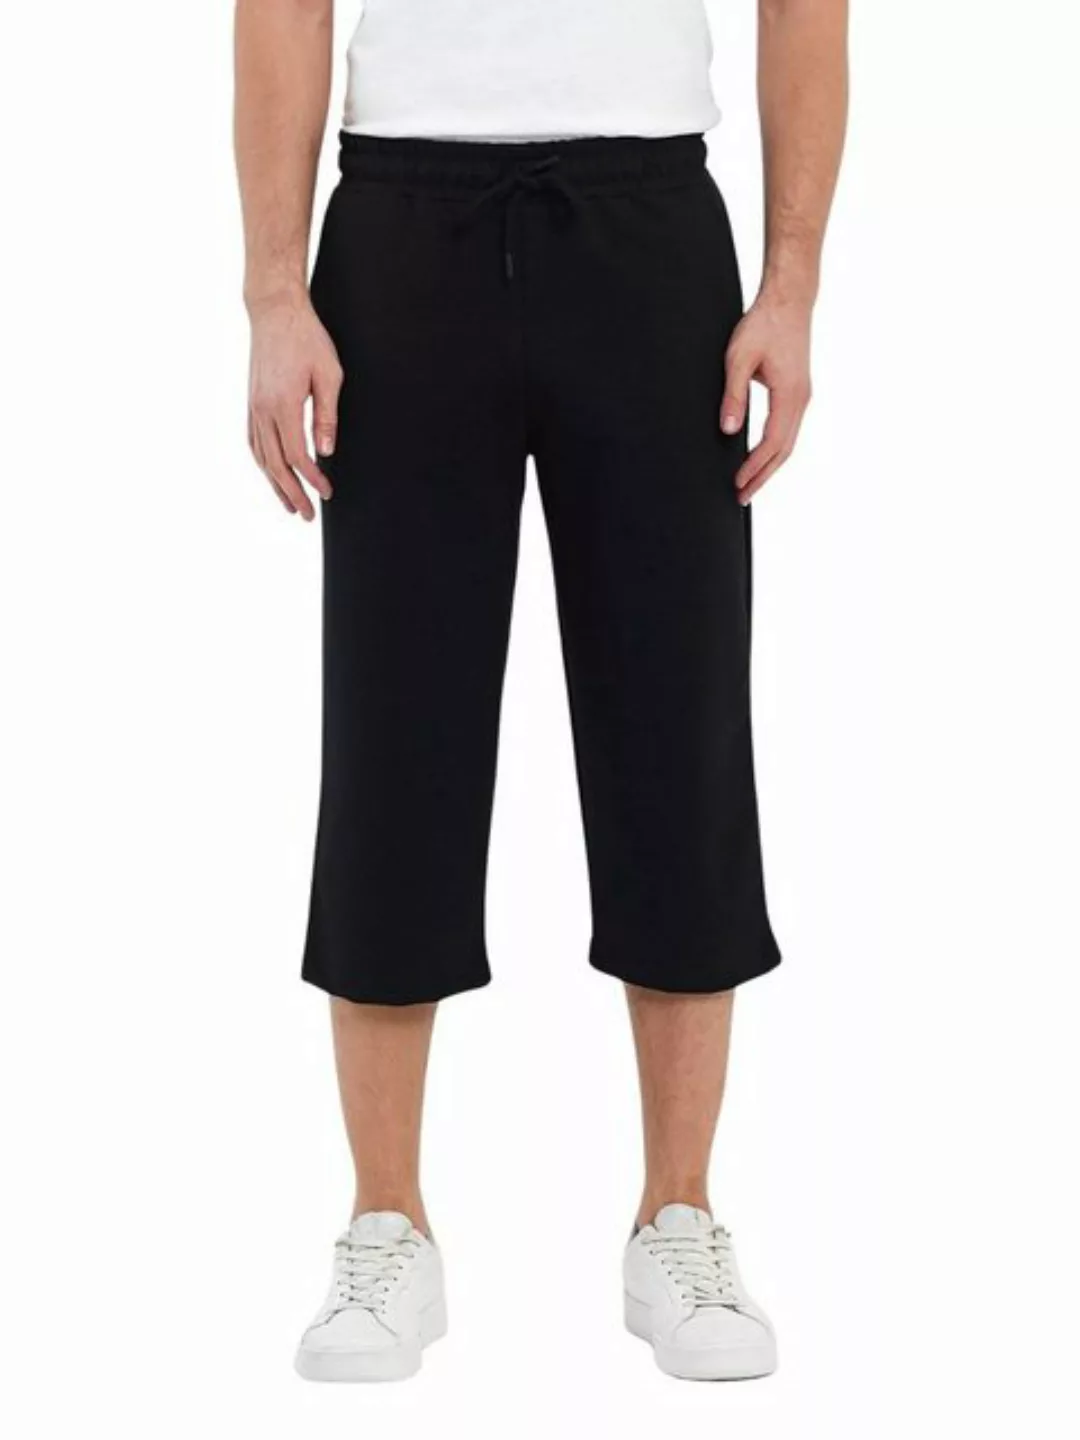 COMEOR Caprihose Herren Bermuda Capri Shorts 3/4 Hosen Sommerhosen günstig online kaufen